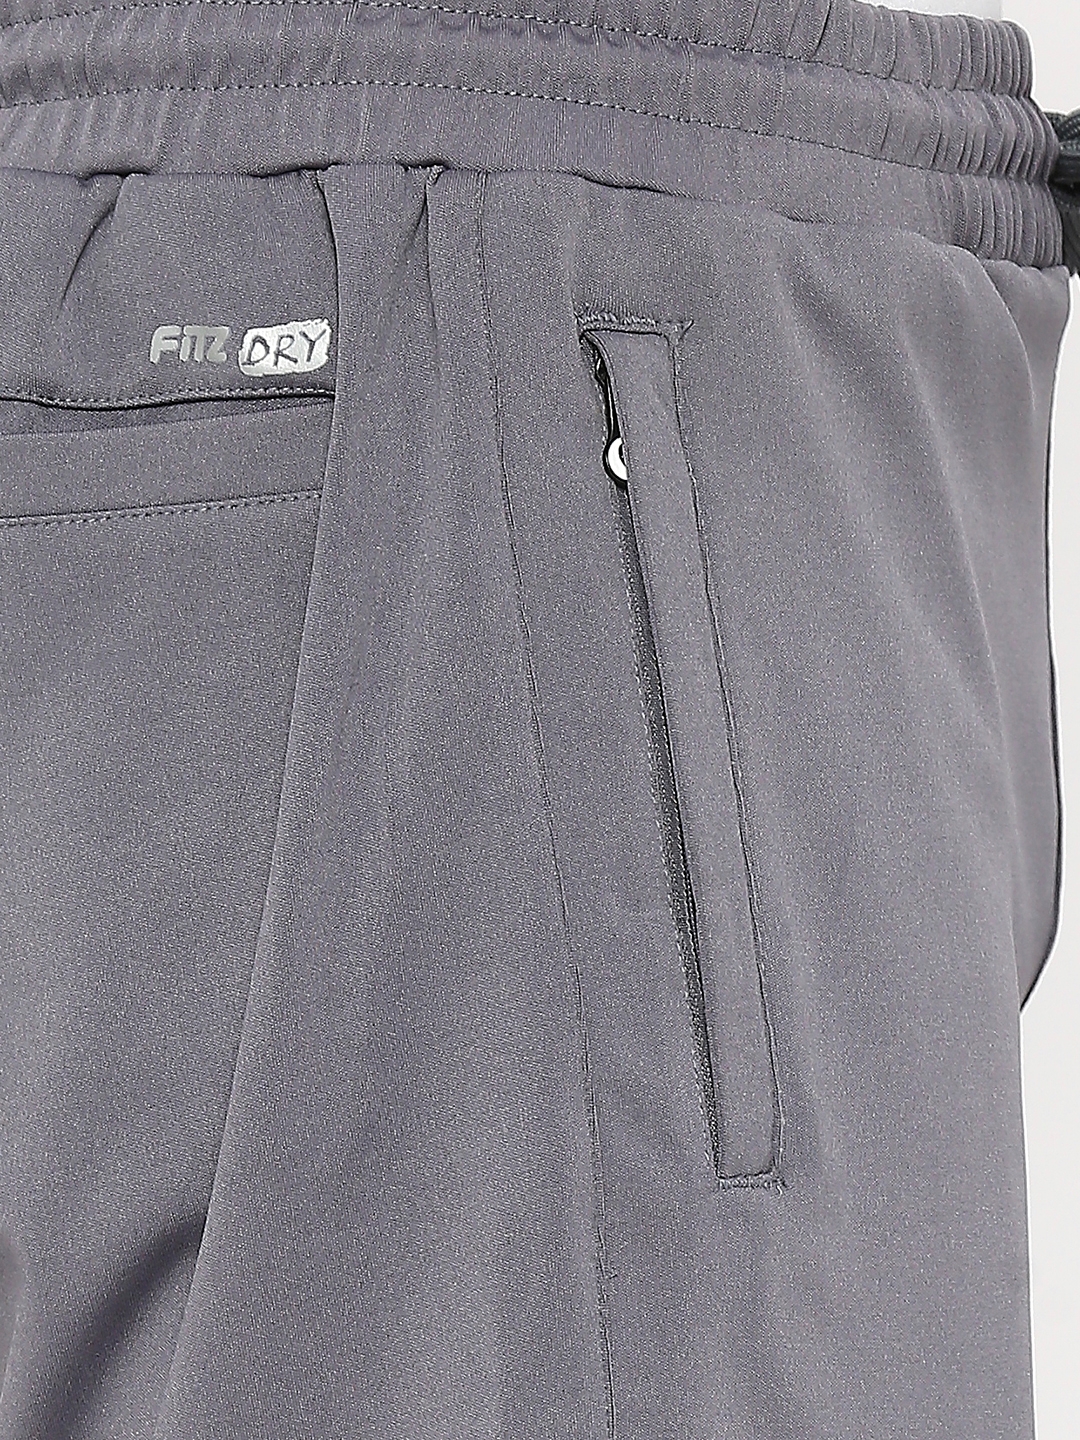 FITZ | Men's  Slim Fit Cotton Grey Shorts 3